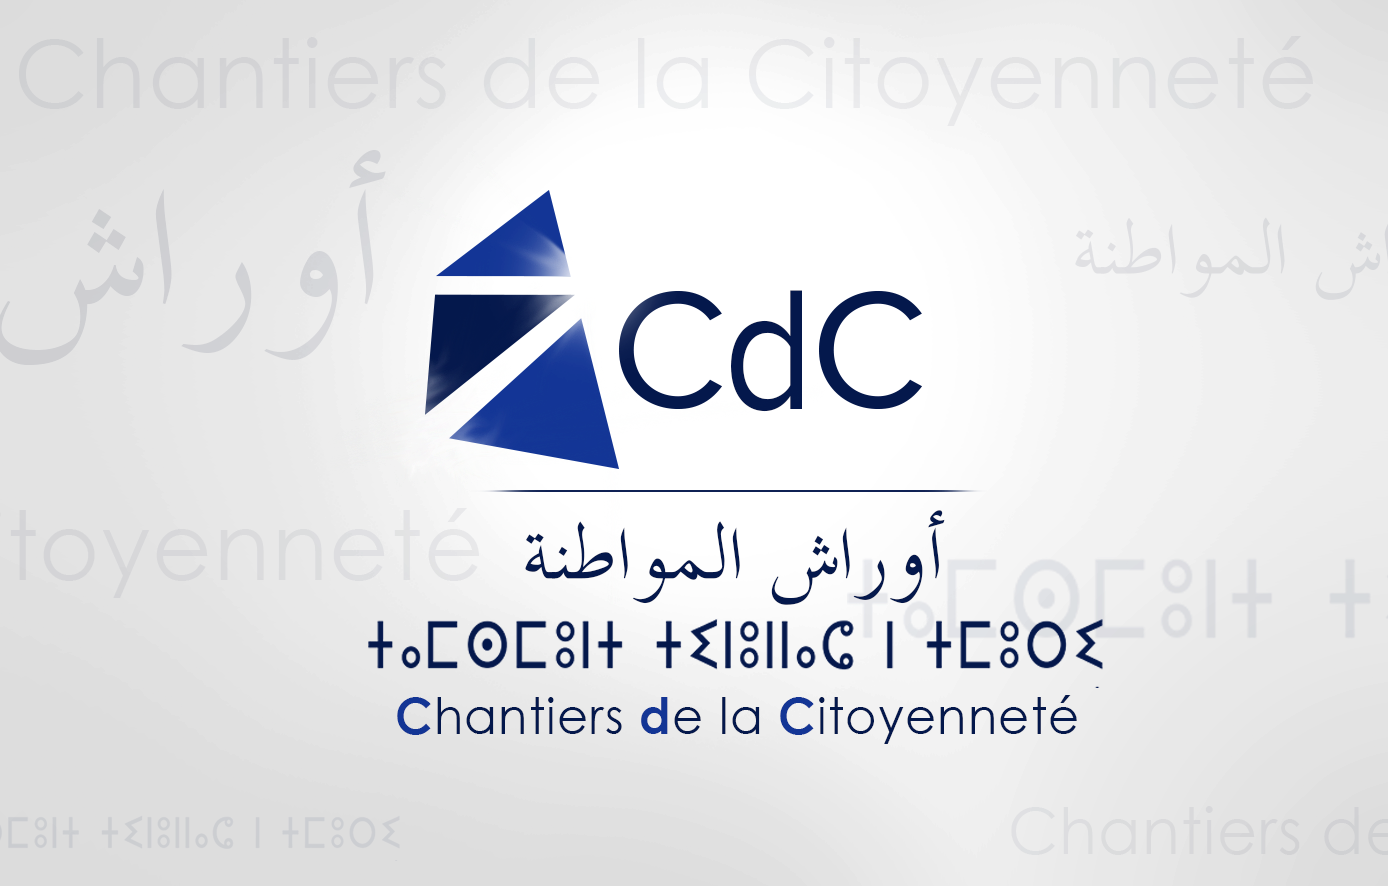 CdC